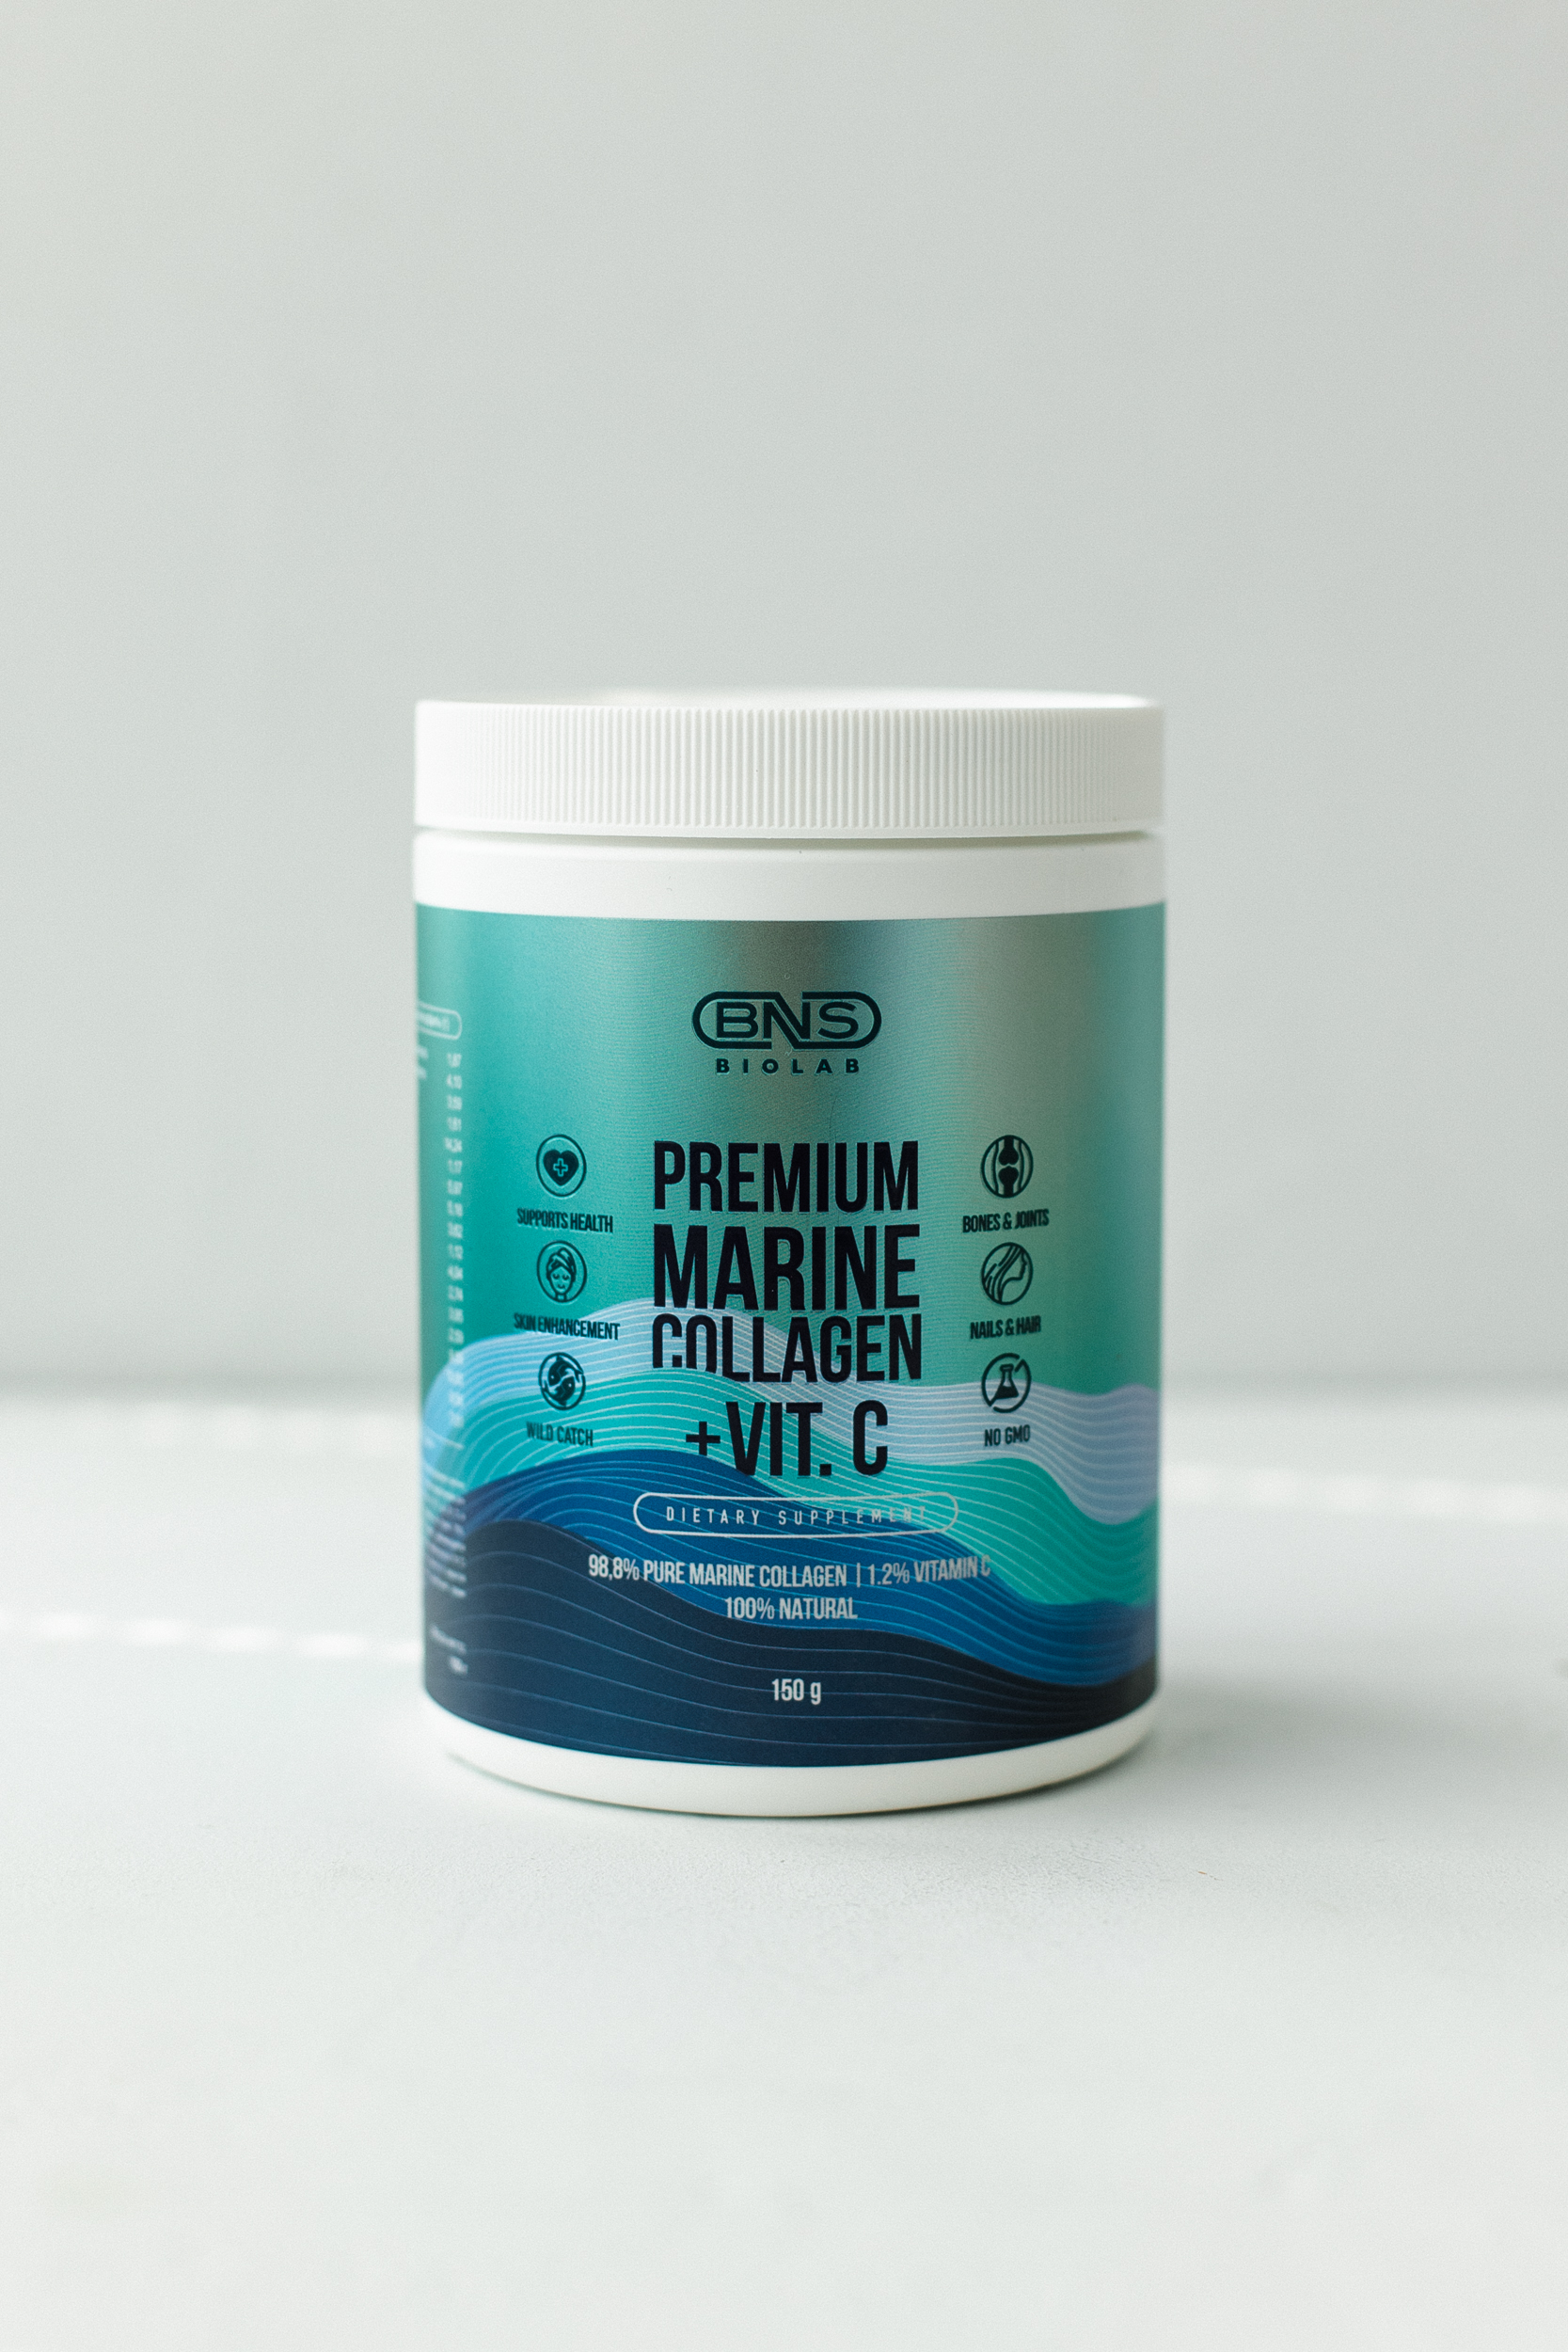 Морской коллаген с витамином С Premium Marine Collagen+Vit.C 150g - фото 1